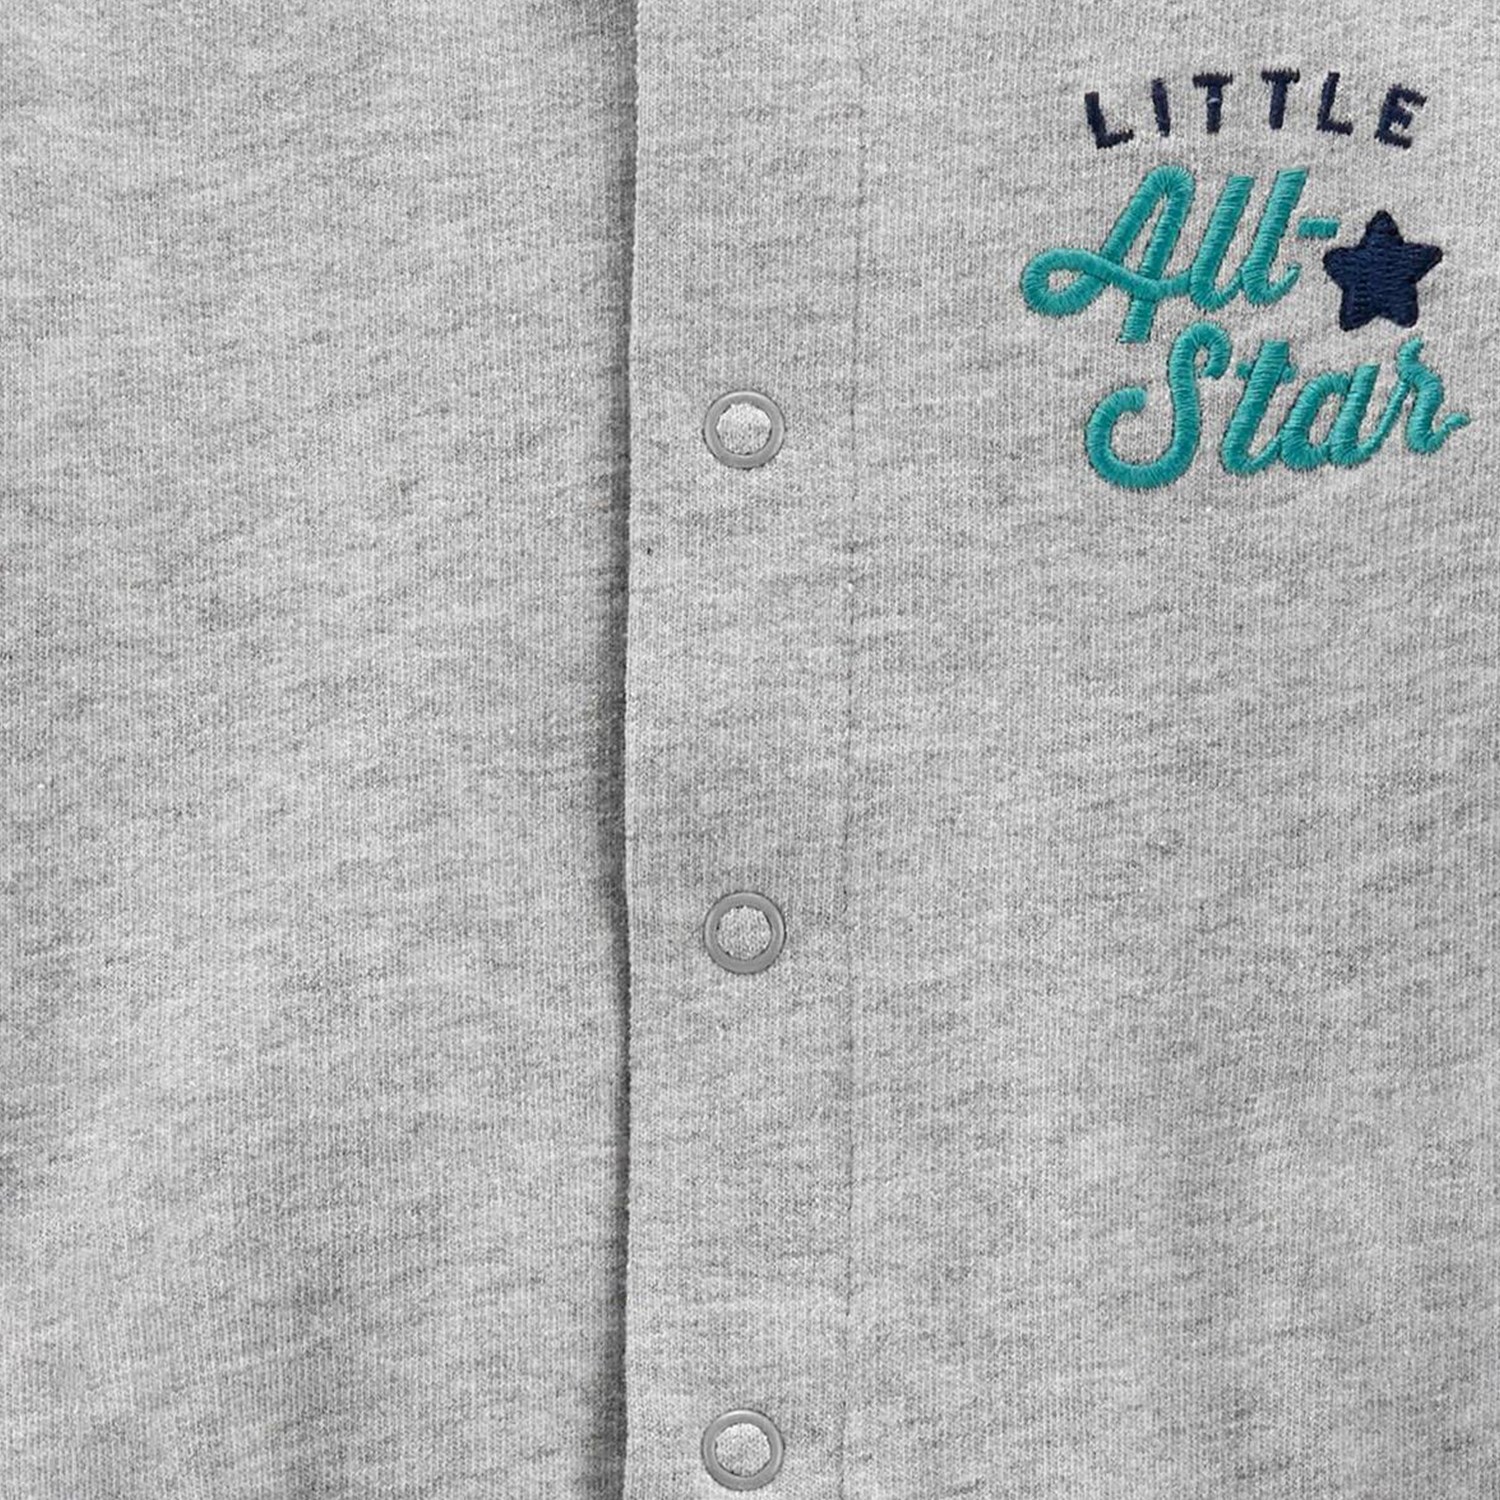 Carter's Little All Star Erkek Bebek Tulumu 1M199310 Gri